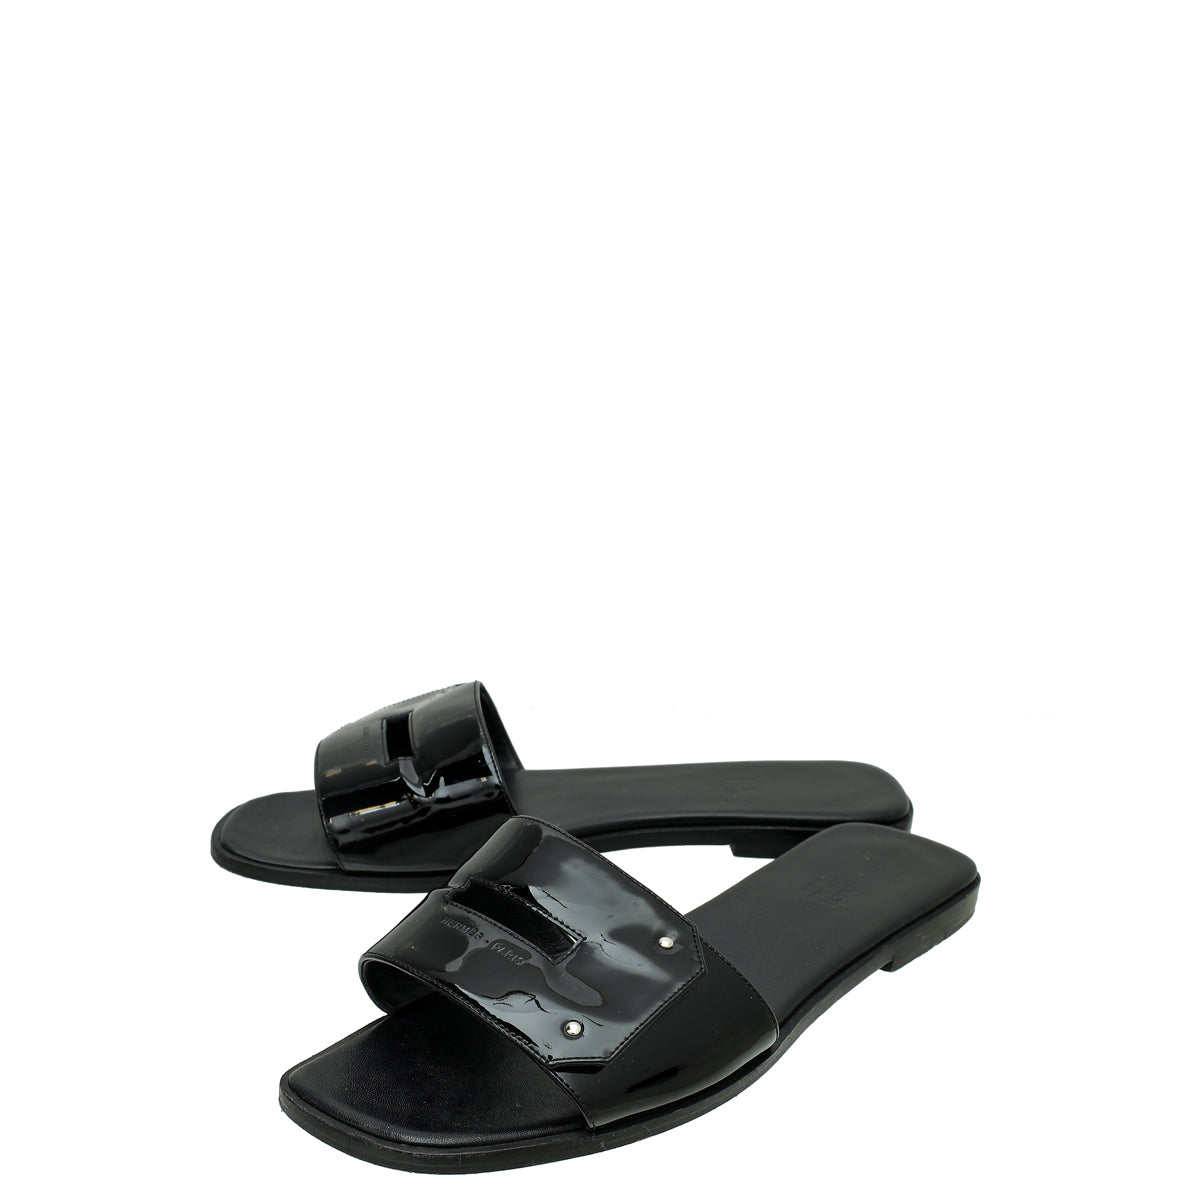 Hermes Noir View Slide Sandals 39